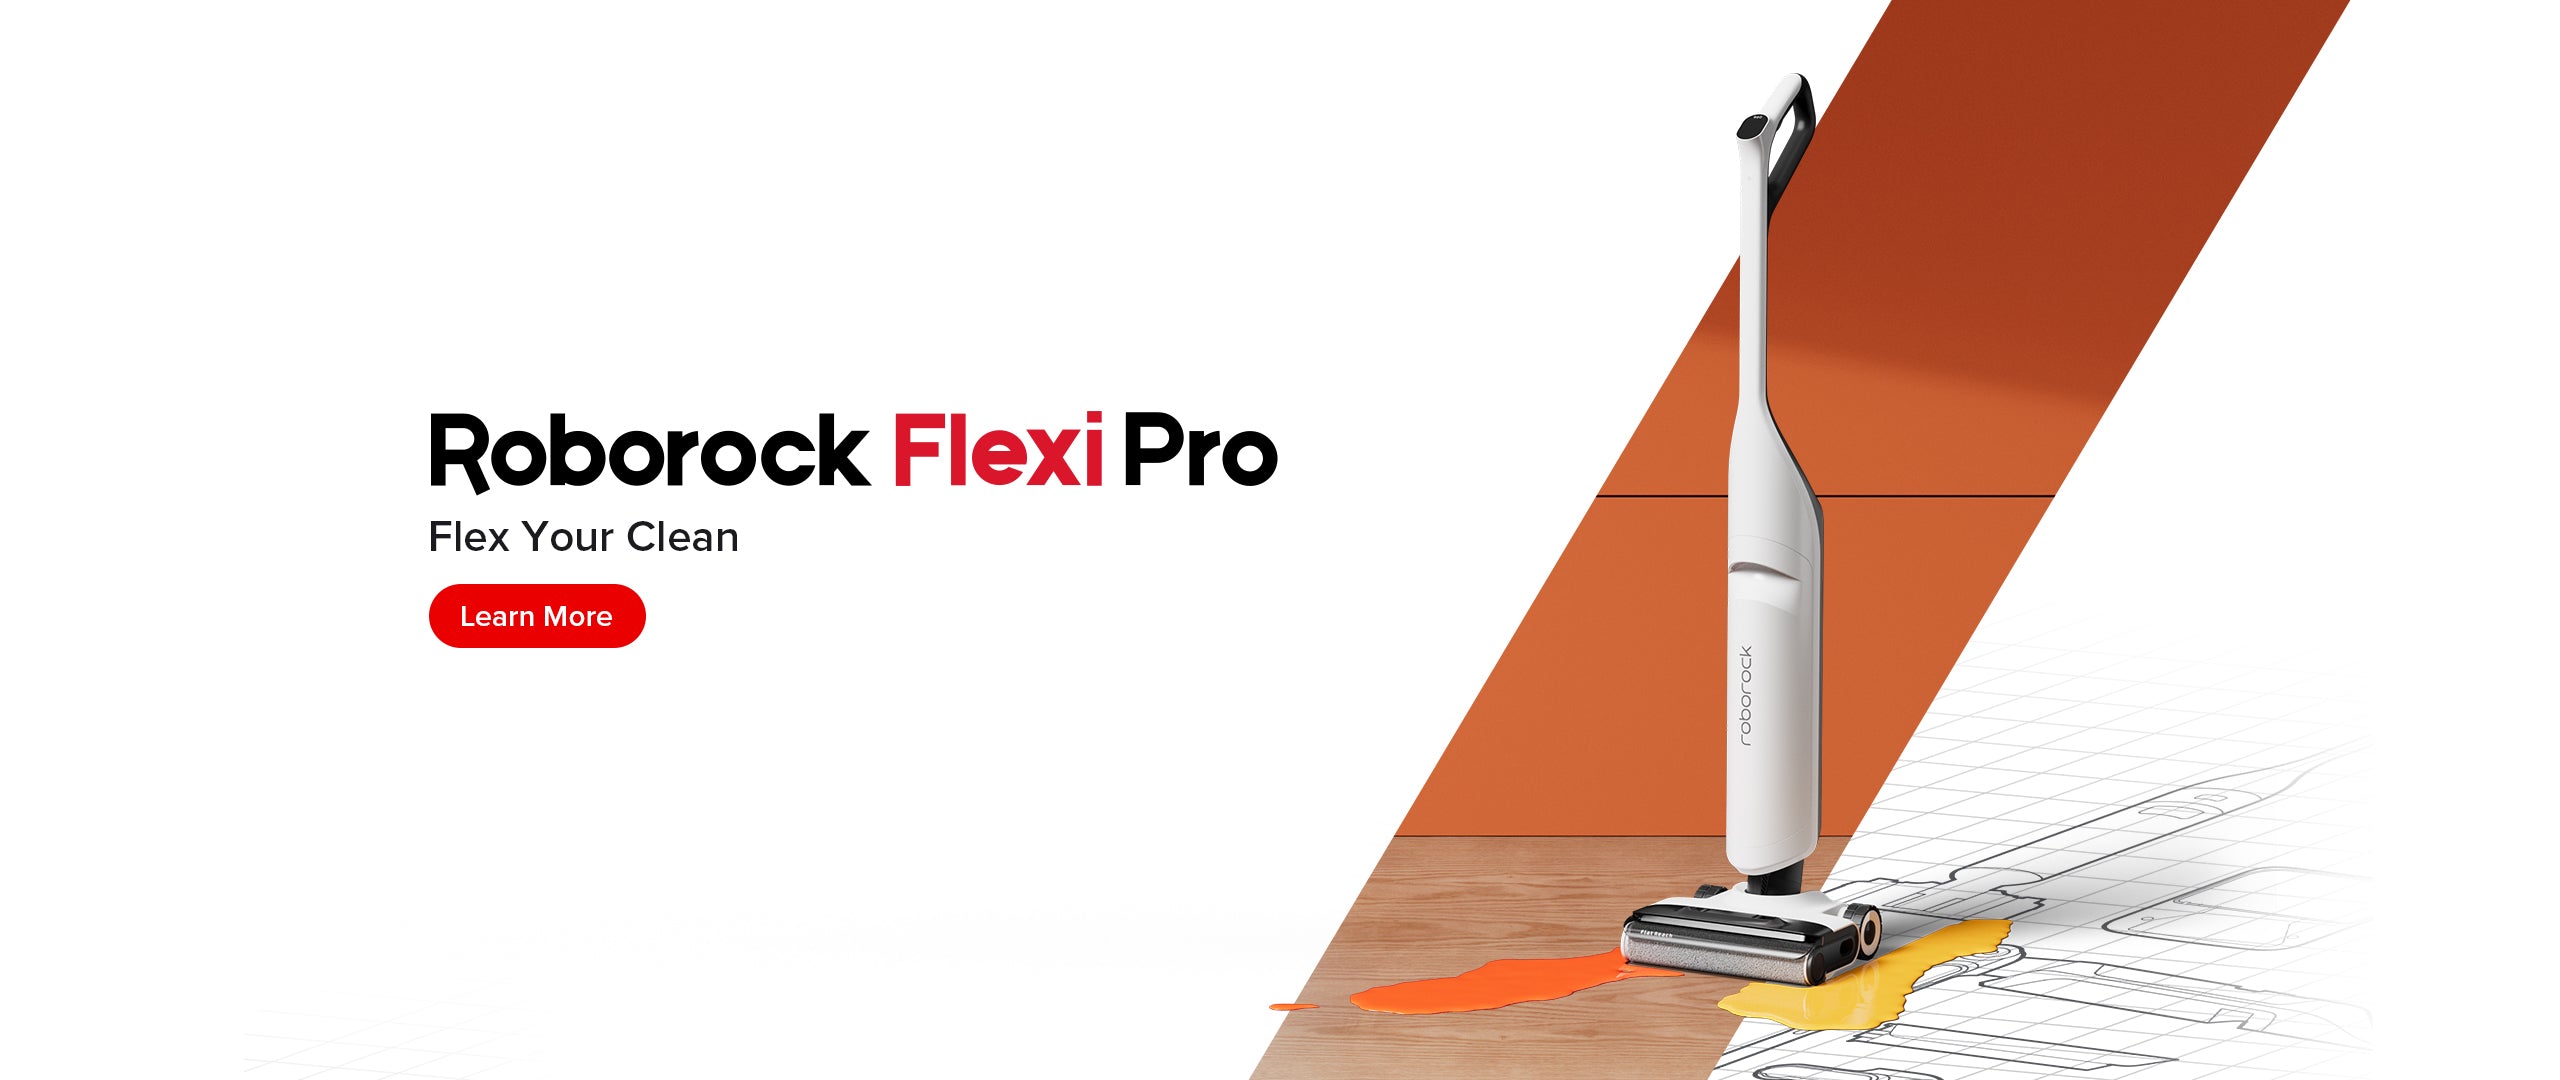 Roborock Flexi Pro